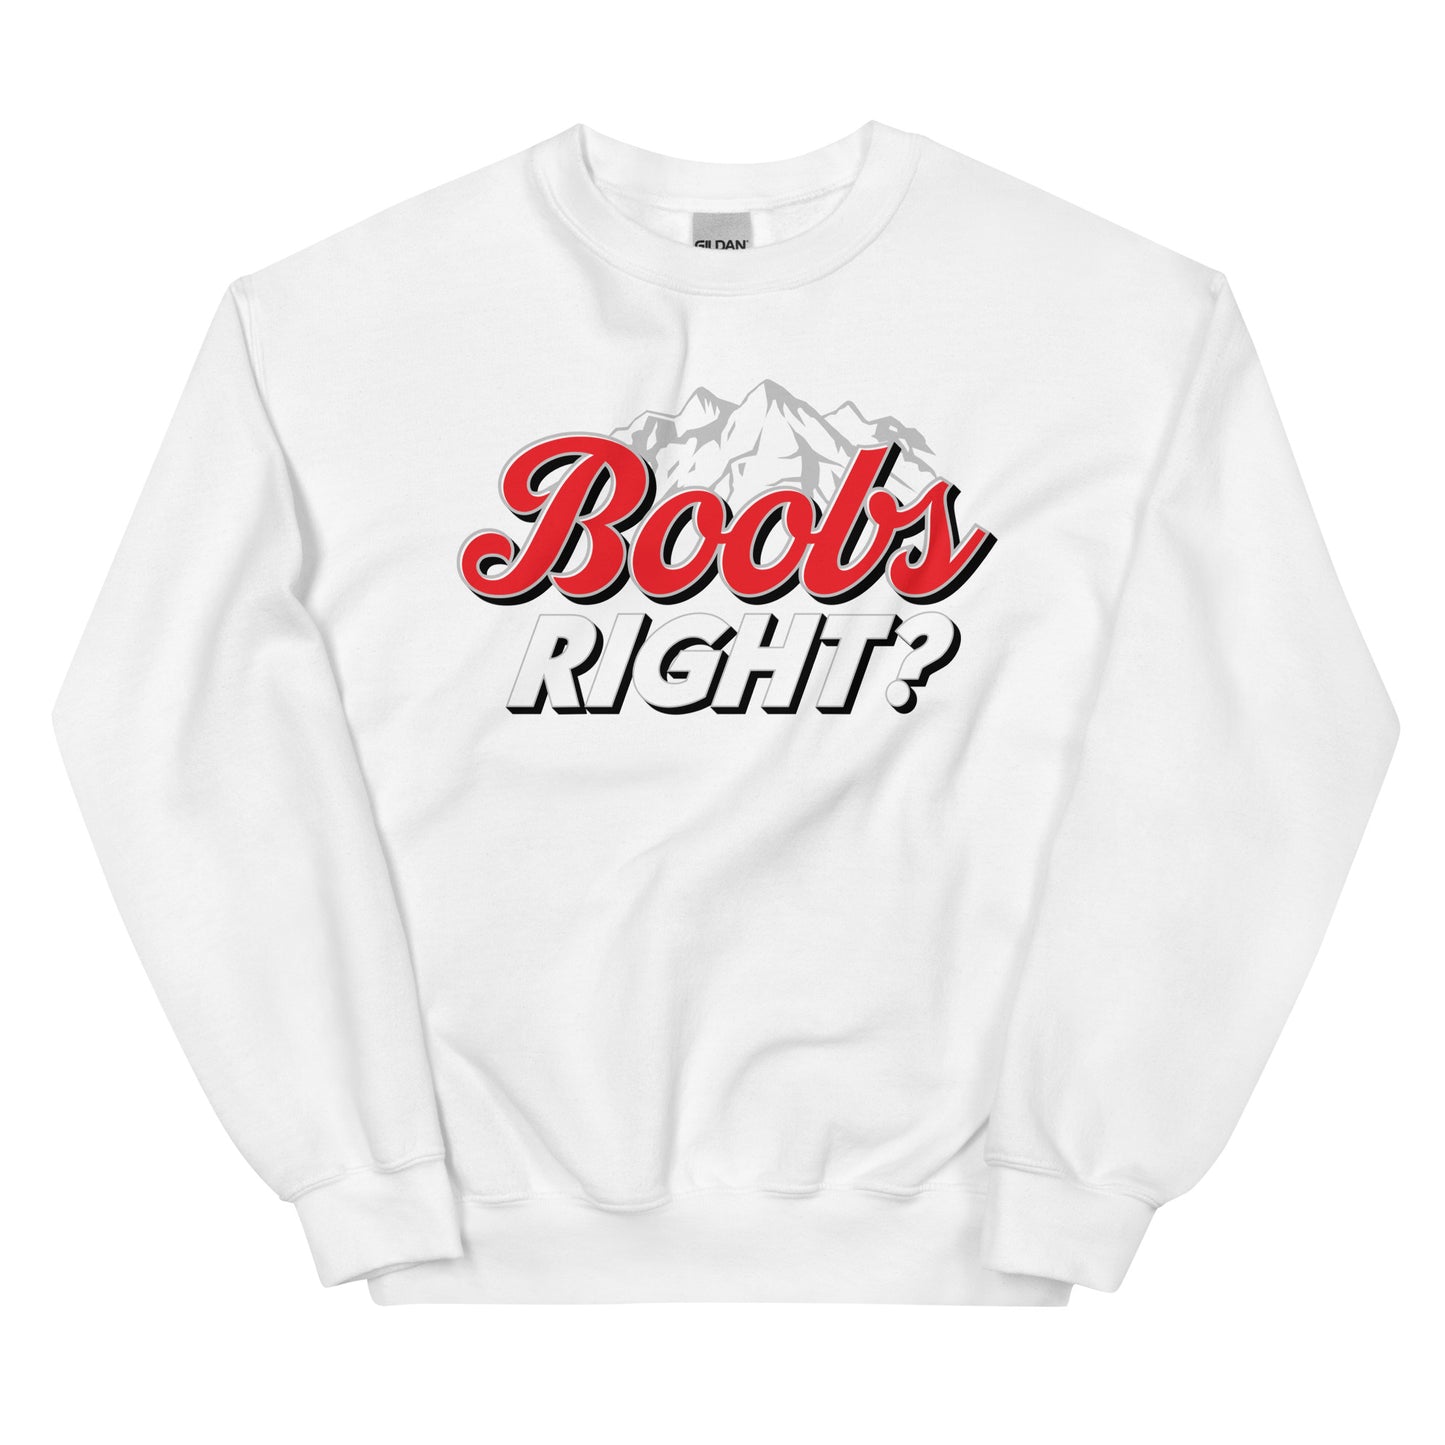 Boobs Right? (Coors Light) Unisex Sweatshirt